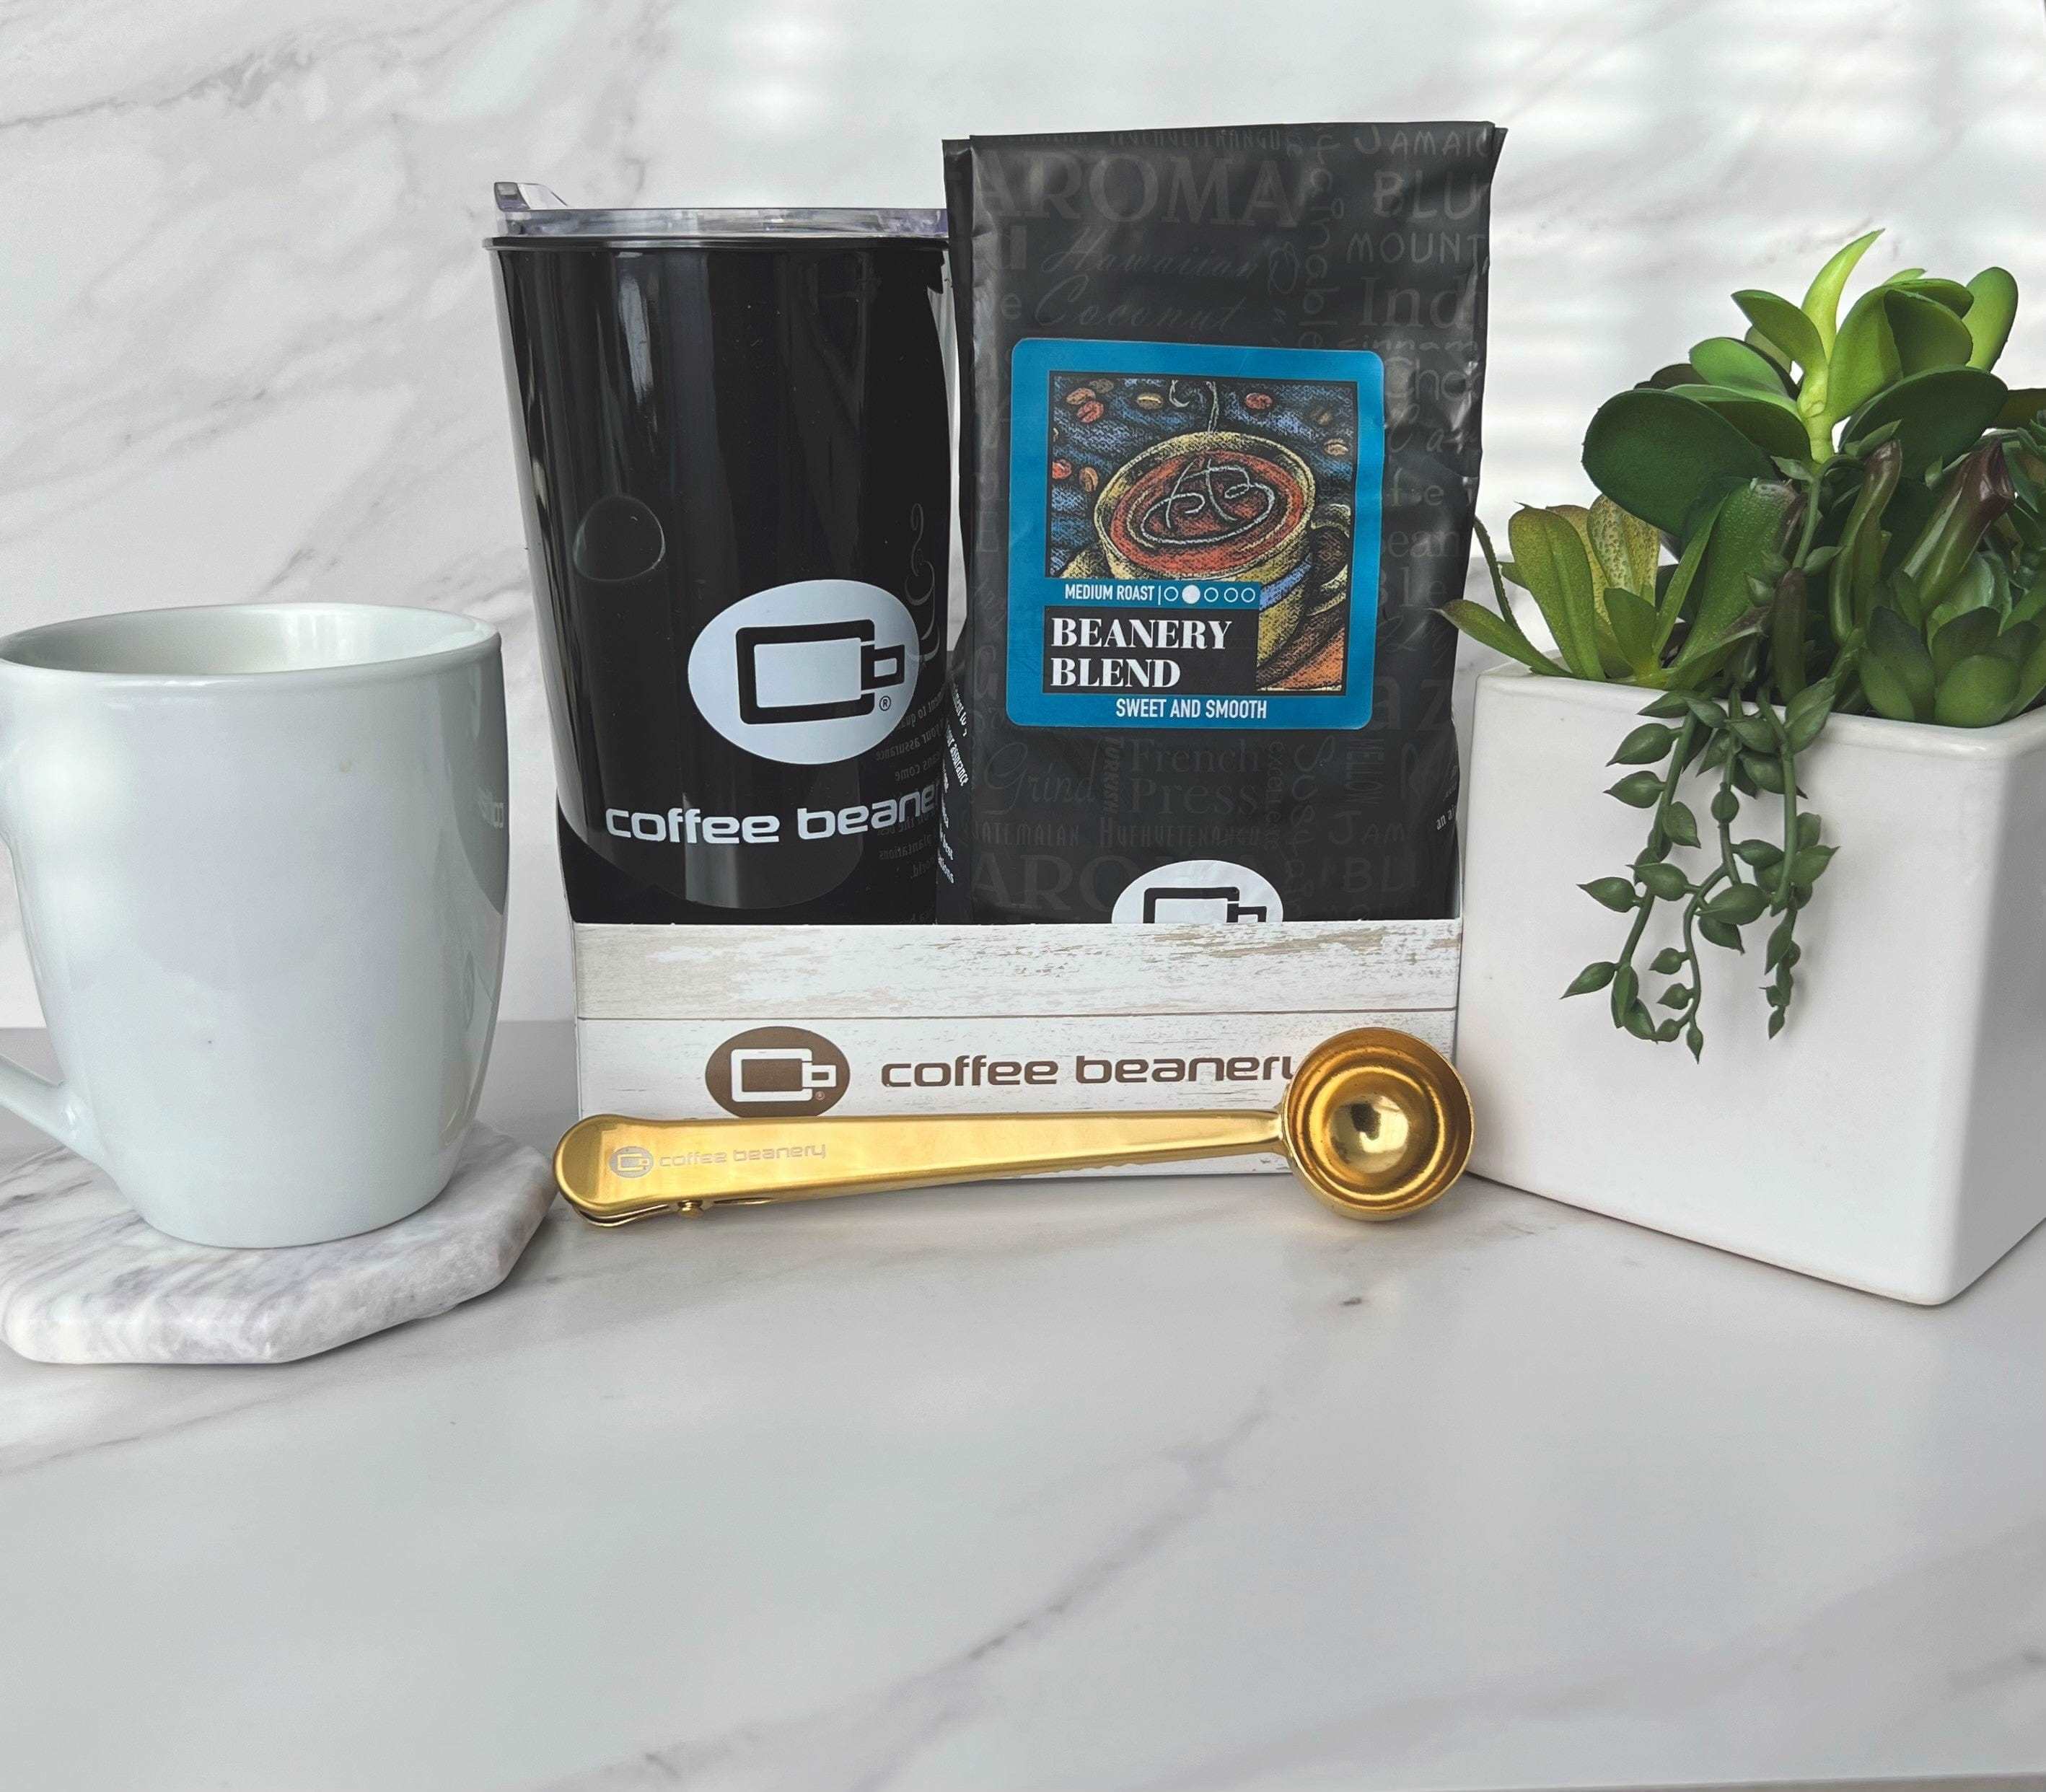 Chocolate and Coffee Gift Box Set – Moka Origins